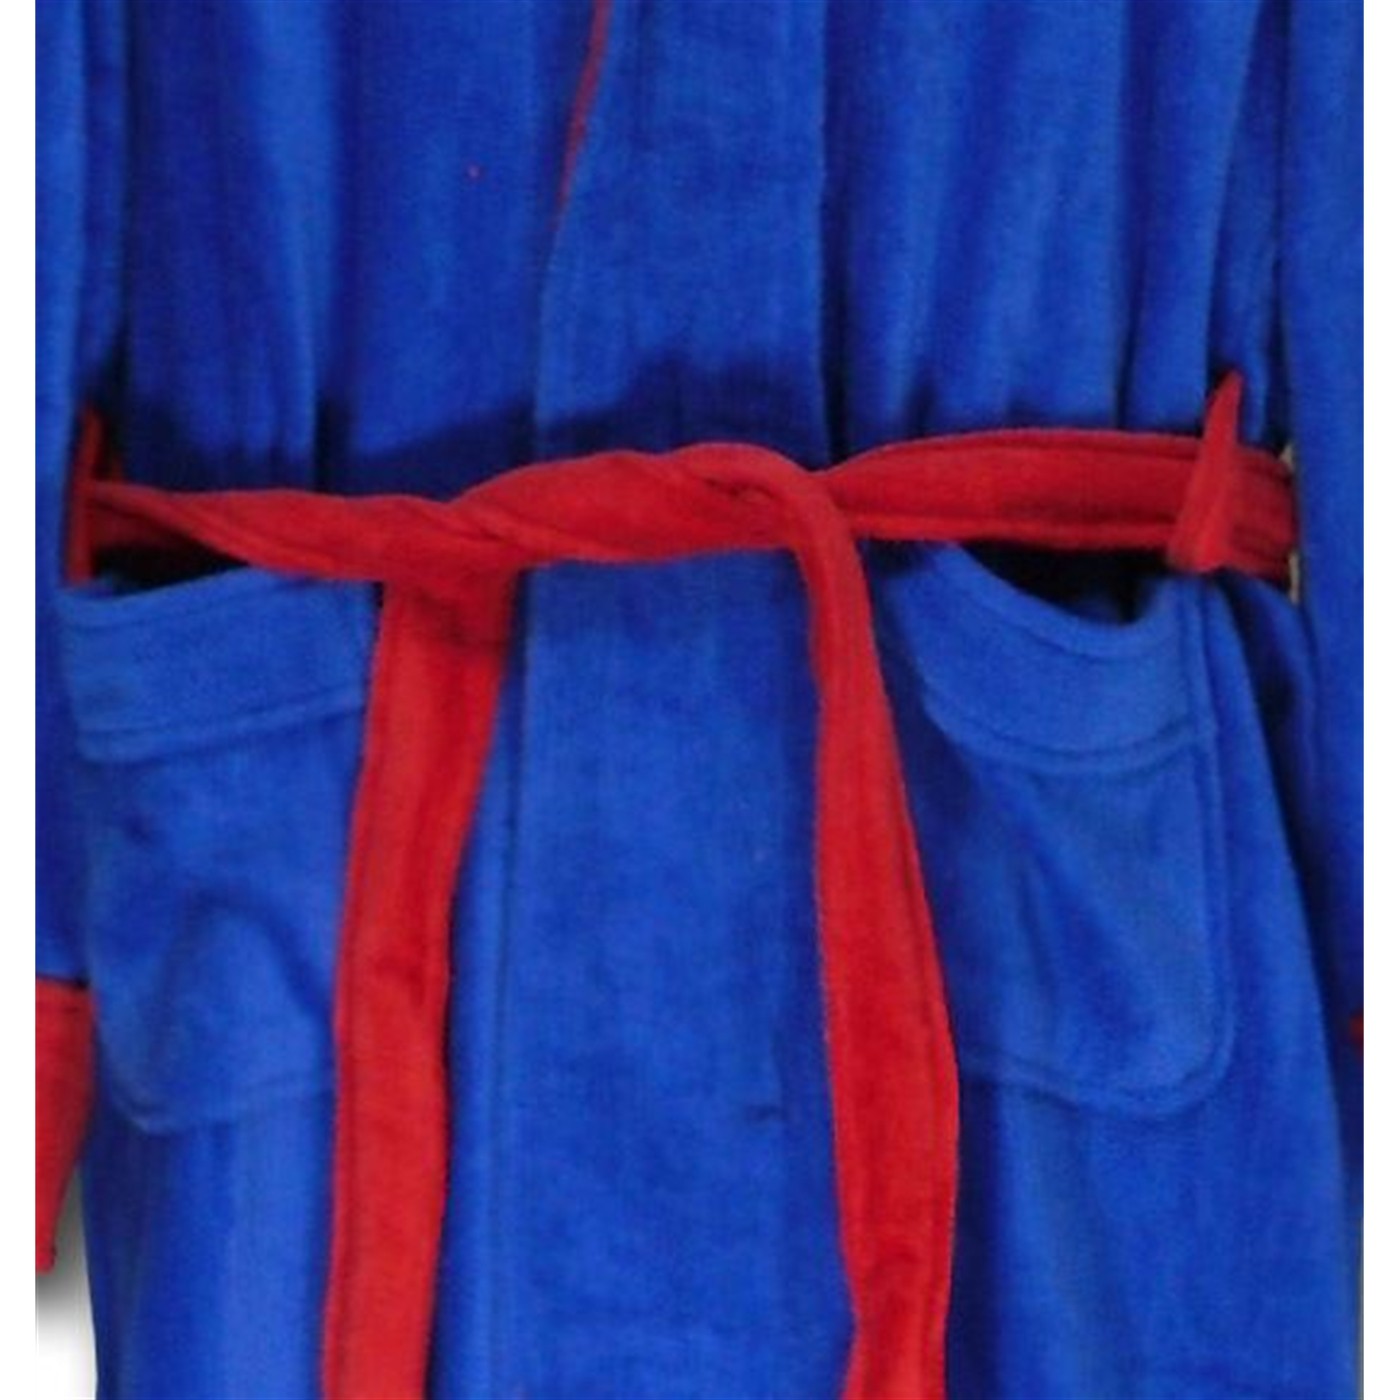 Superman Terry Cloth Robe- OSFA